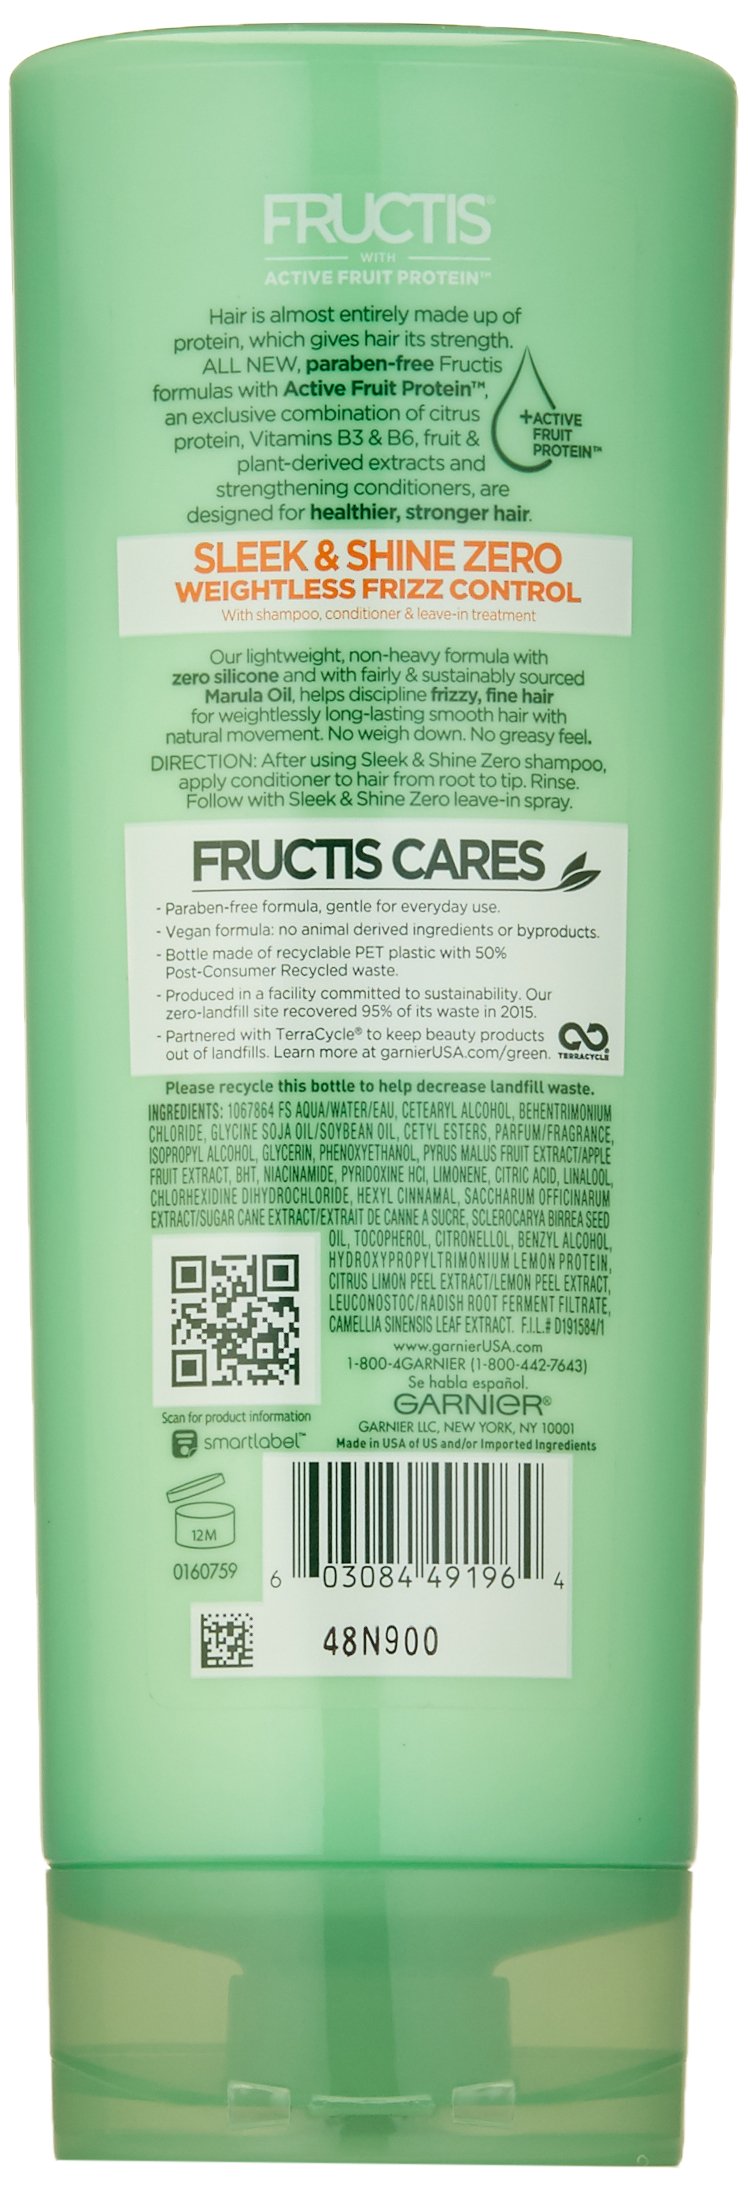 Garnier Hair Care Fructis Sleek and Shine Zero Conditioner, 12 Fluid Ounc